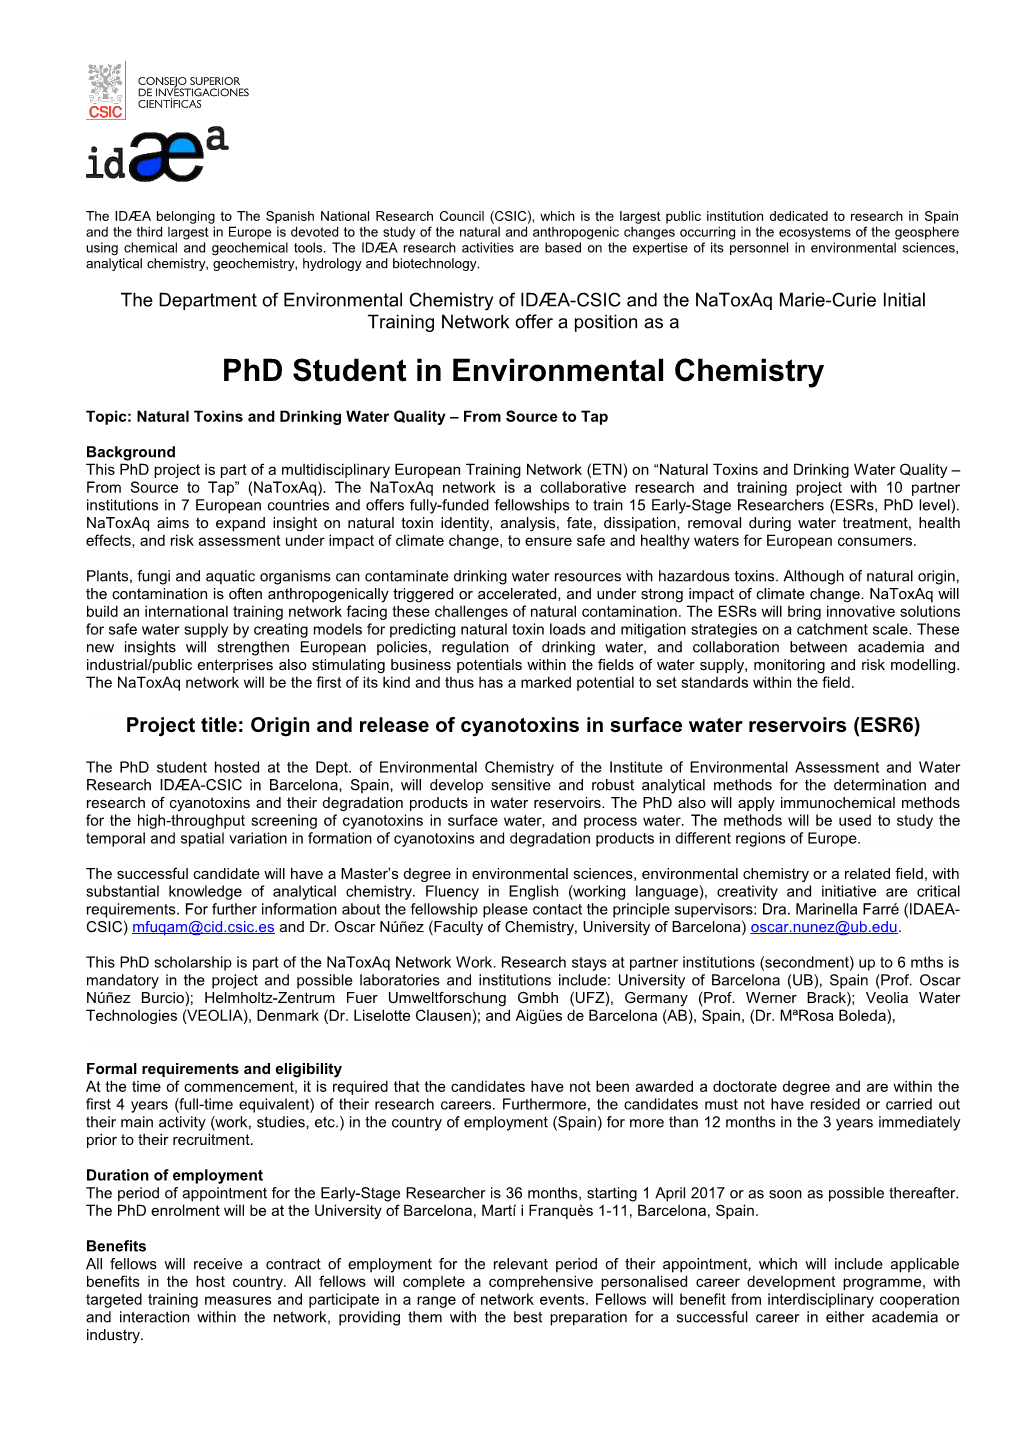 Phd Student in Environmental Chemistry